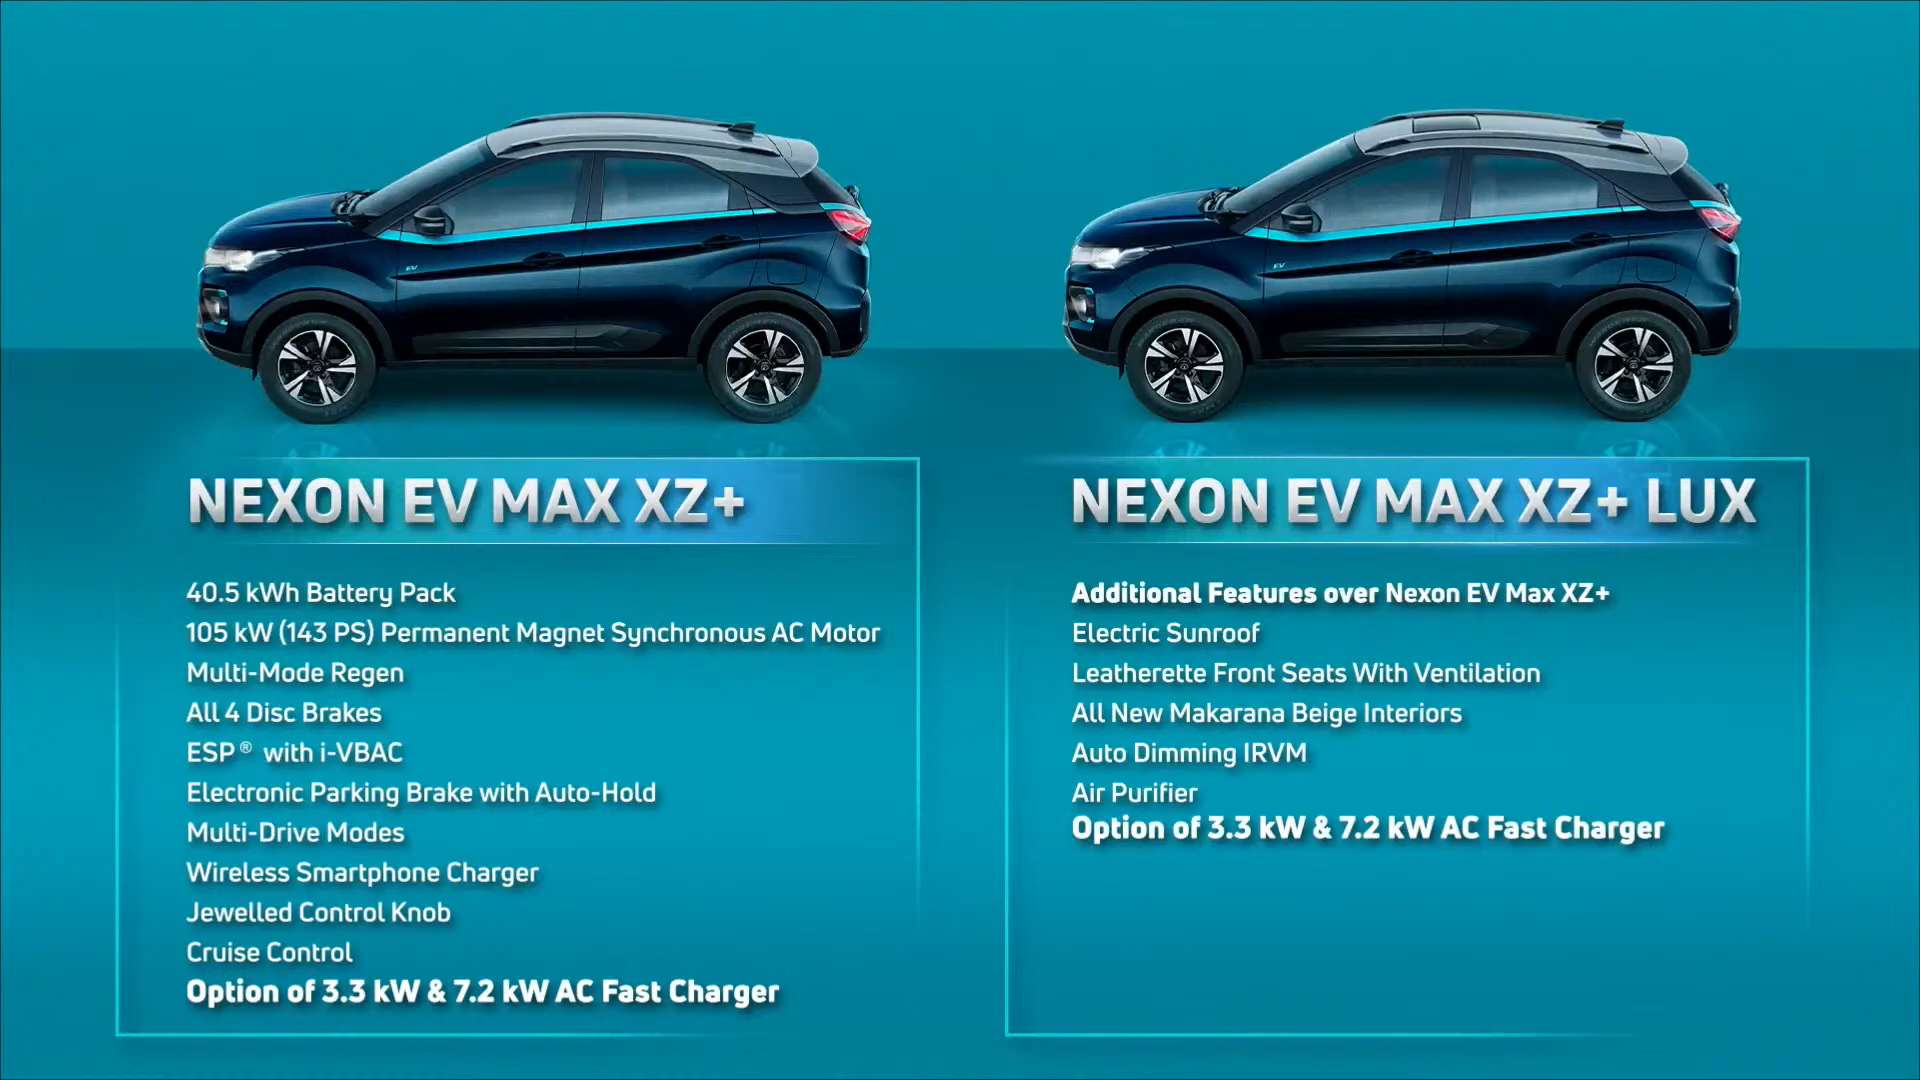 Tata Nexon EV Max - Variant Differences